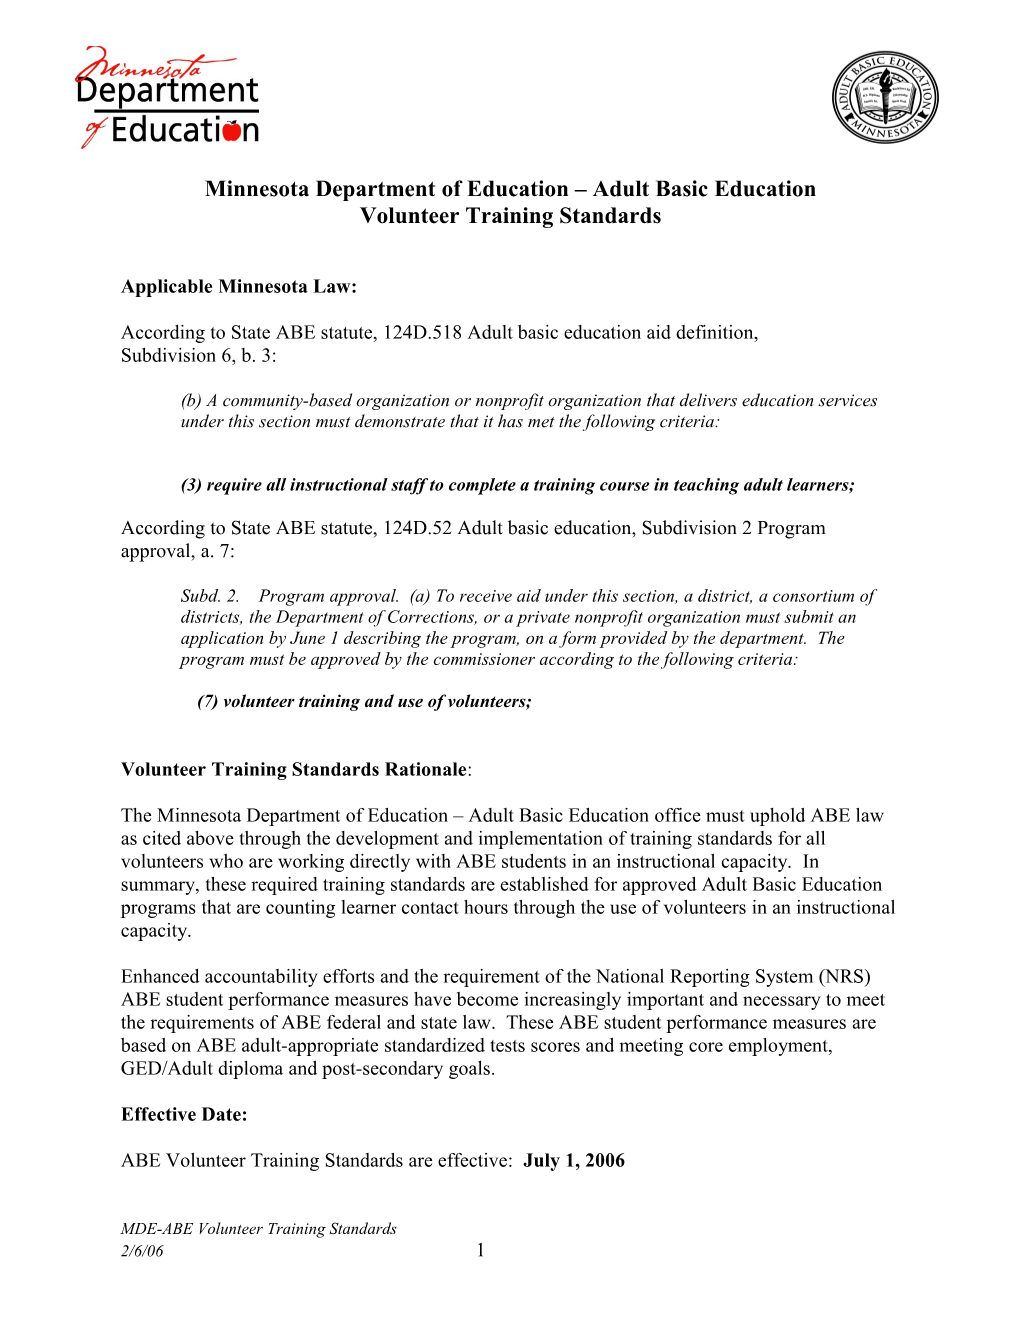 Minnesota Department of Education Adult Basic Education